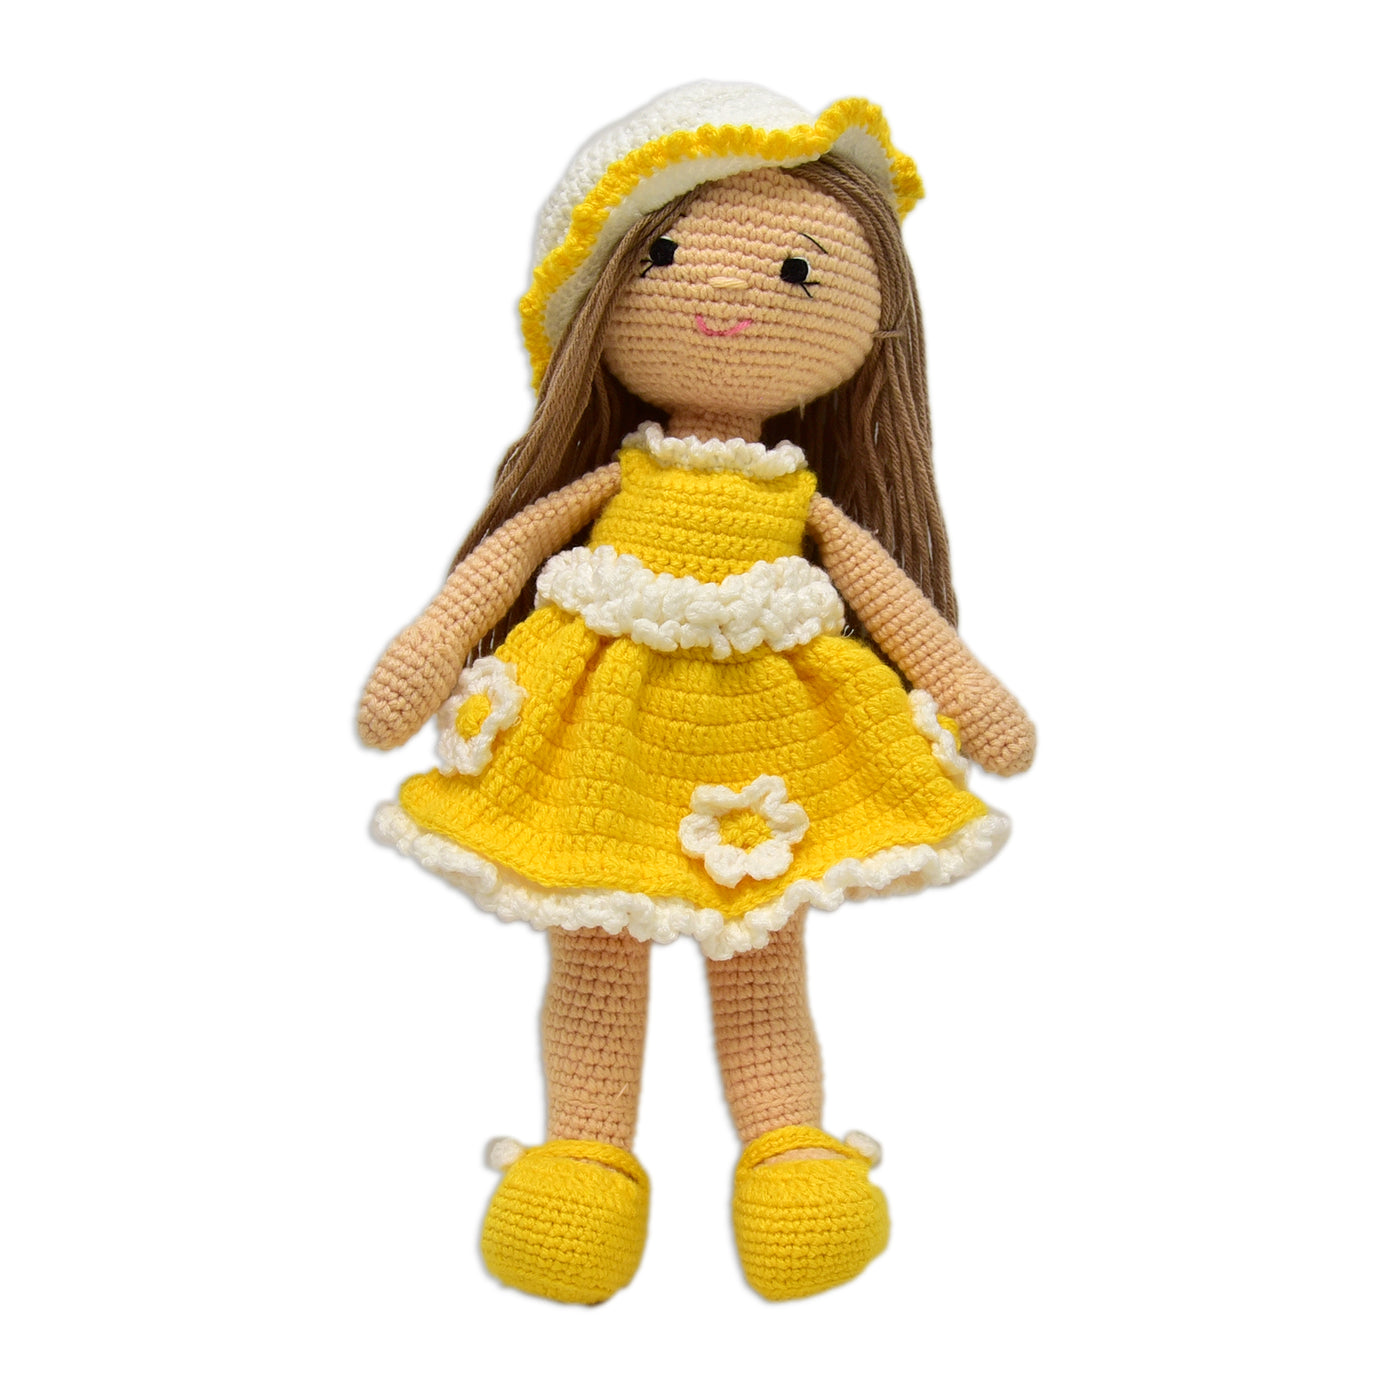 Handcrafted Amigurumi Sunshine Doll